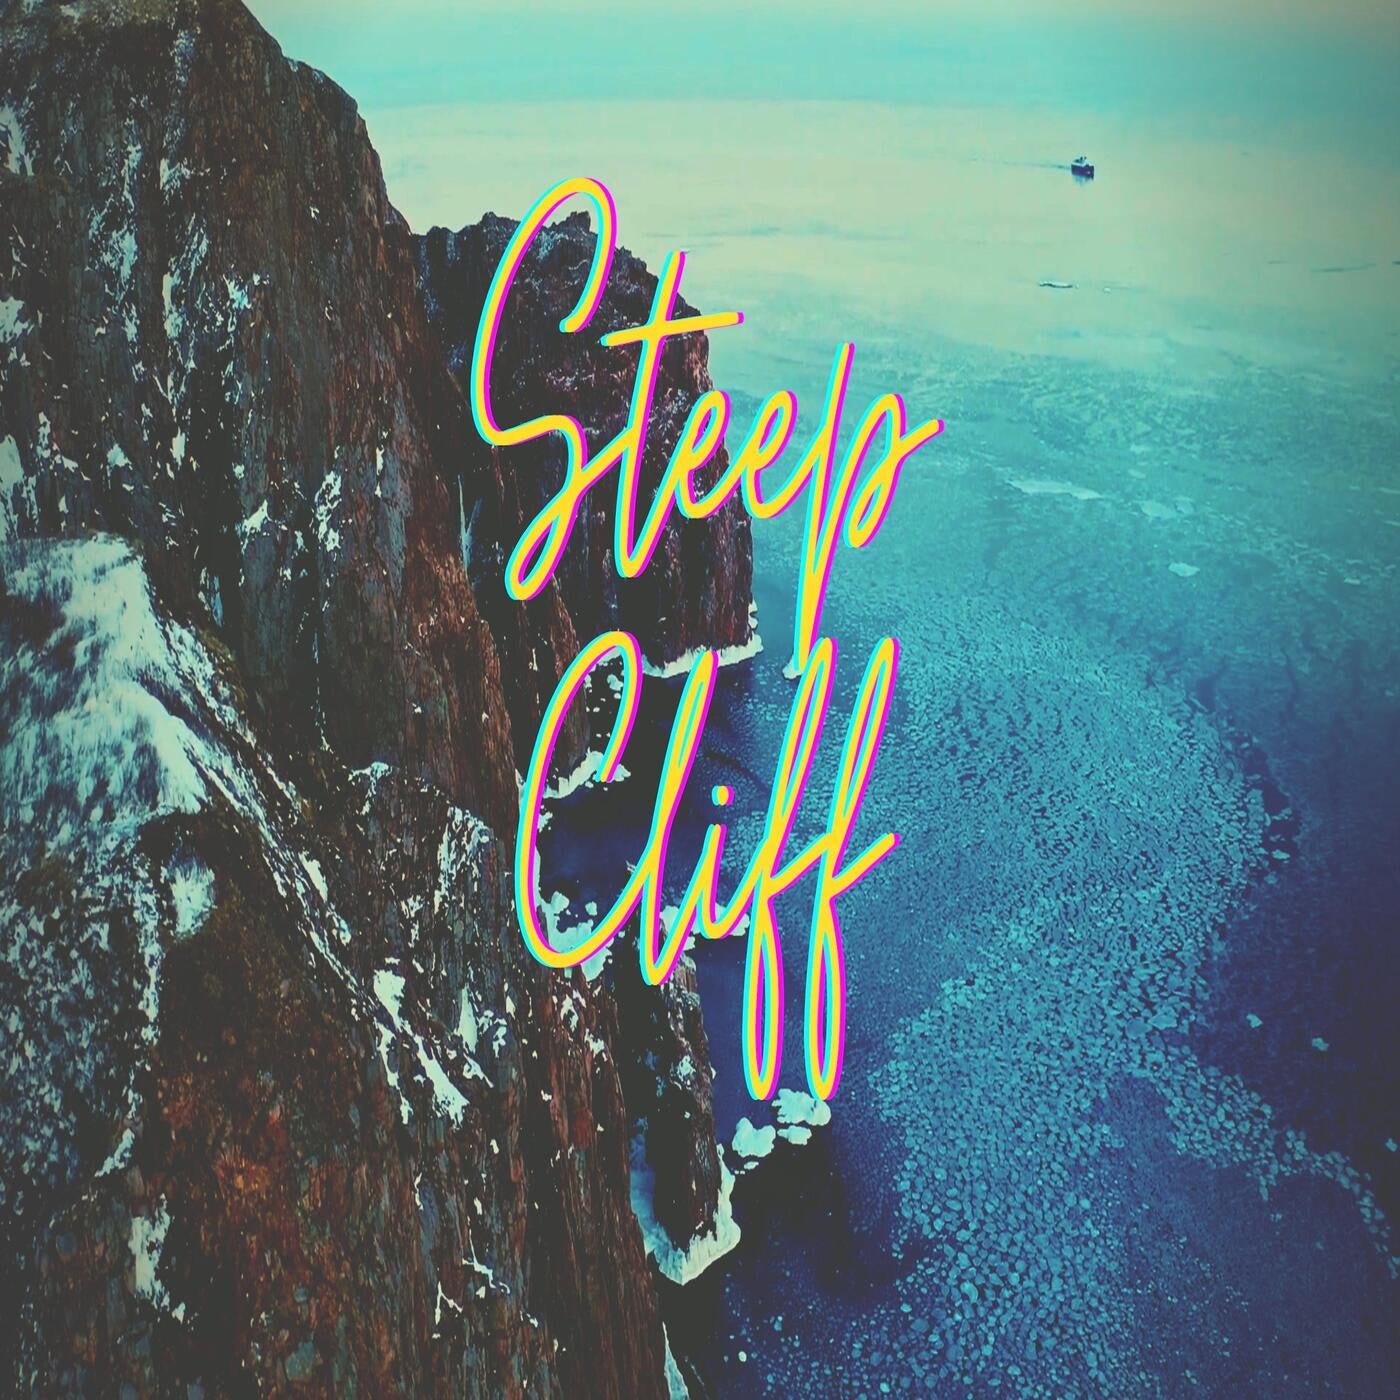 Steep Cliff